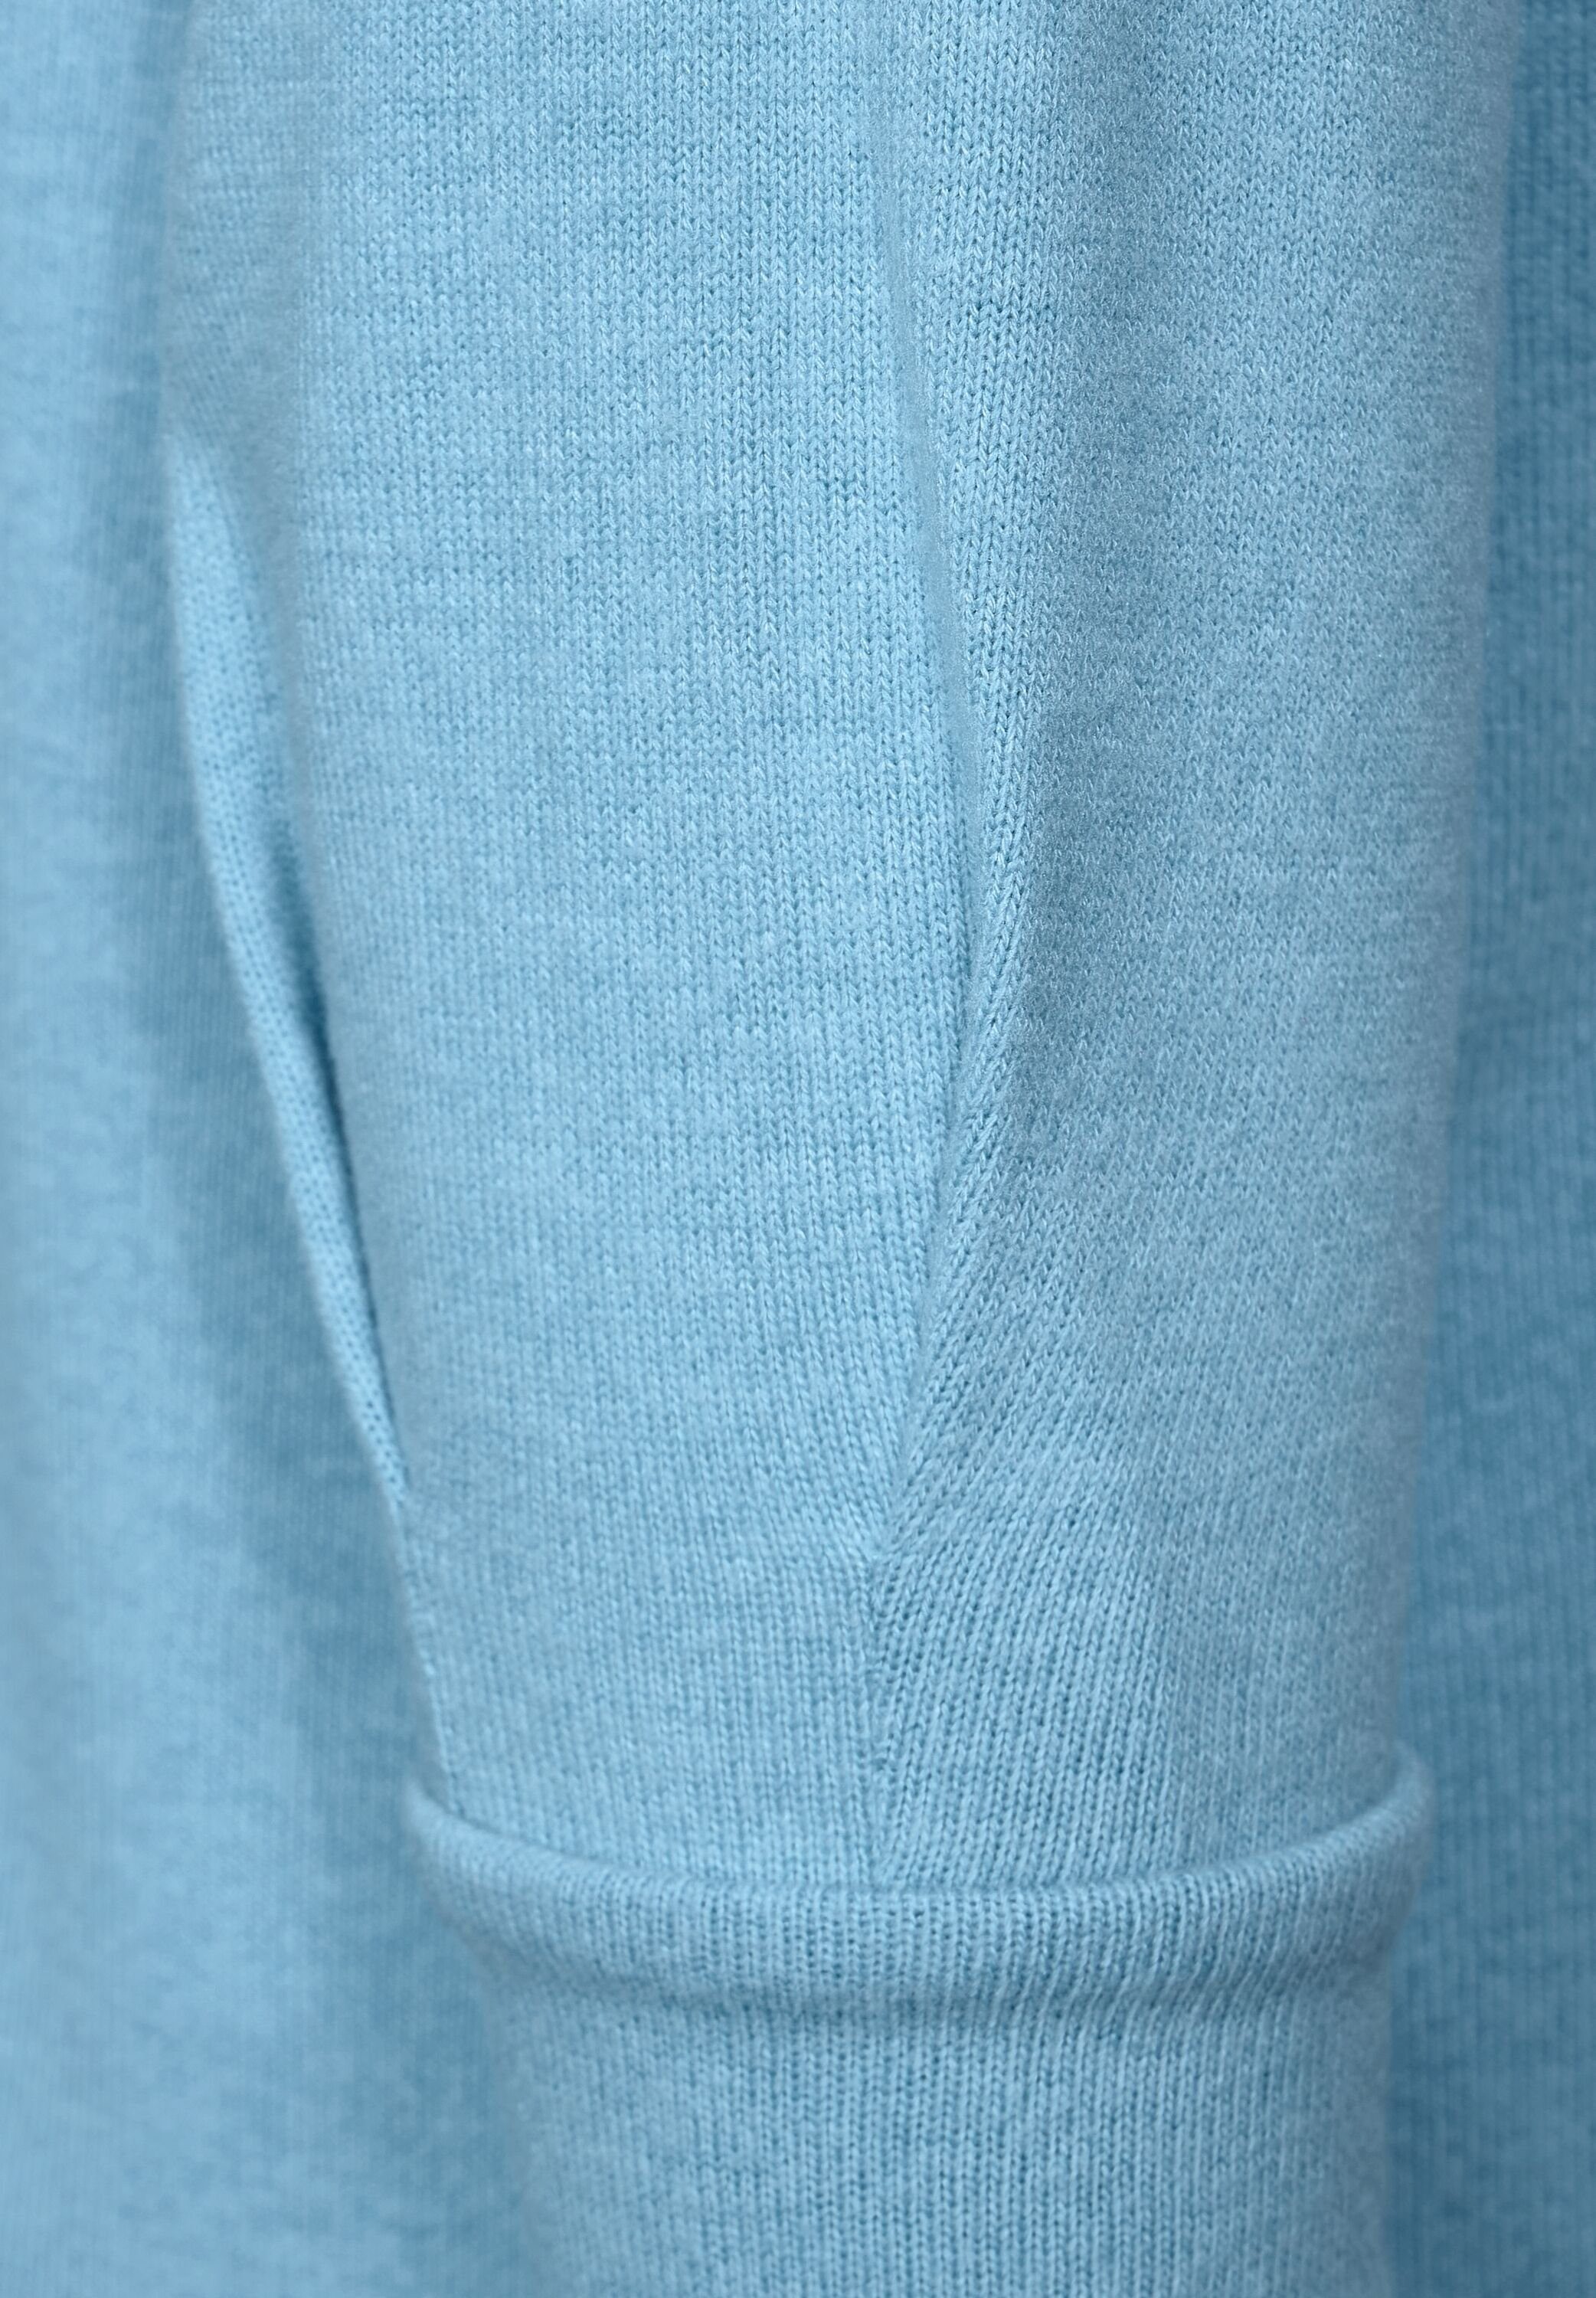 new Shirtjacke ONE aquamarine im Design mel. blue STREET light Jacy Shirtjacke QR offenen LTD Style